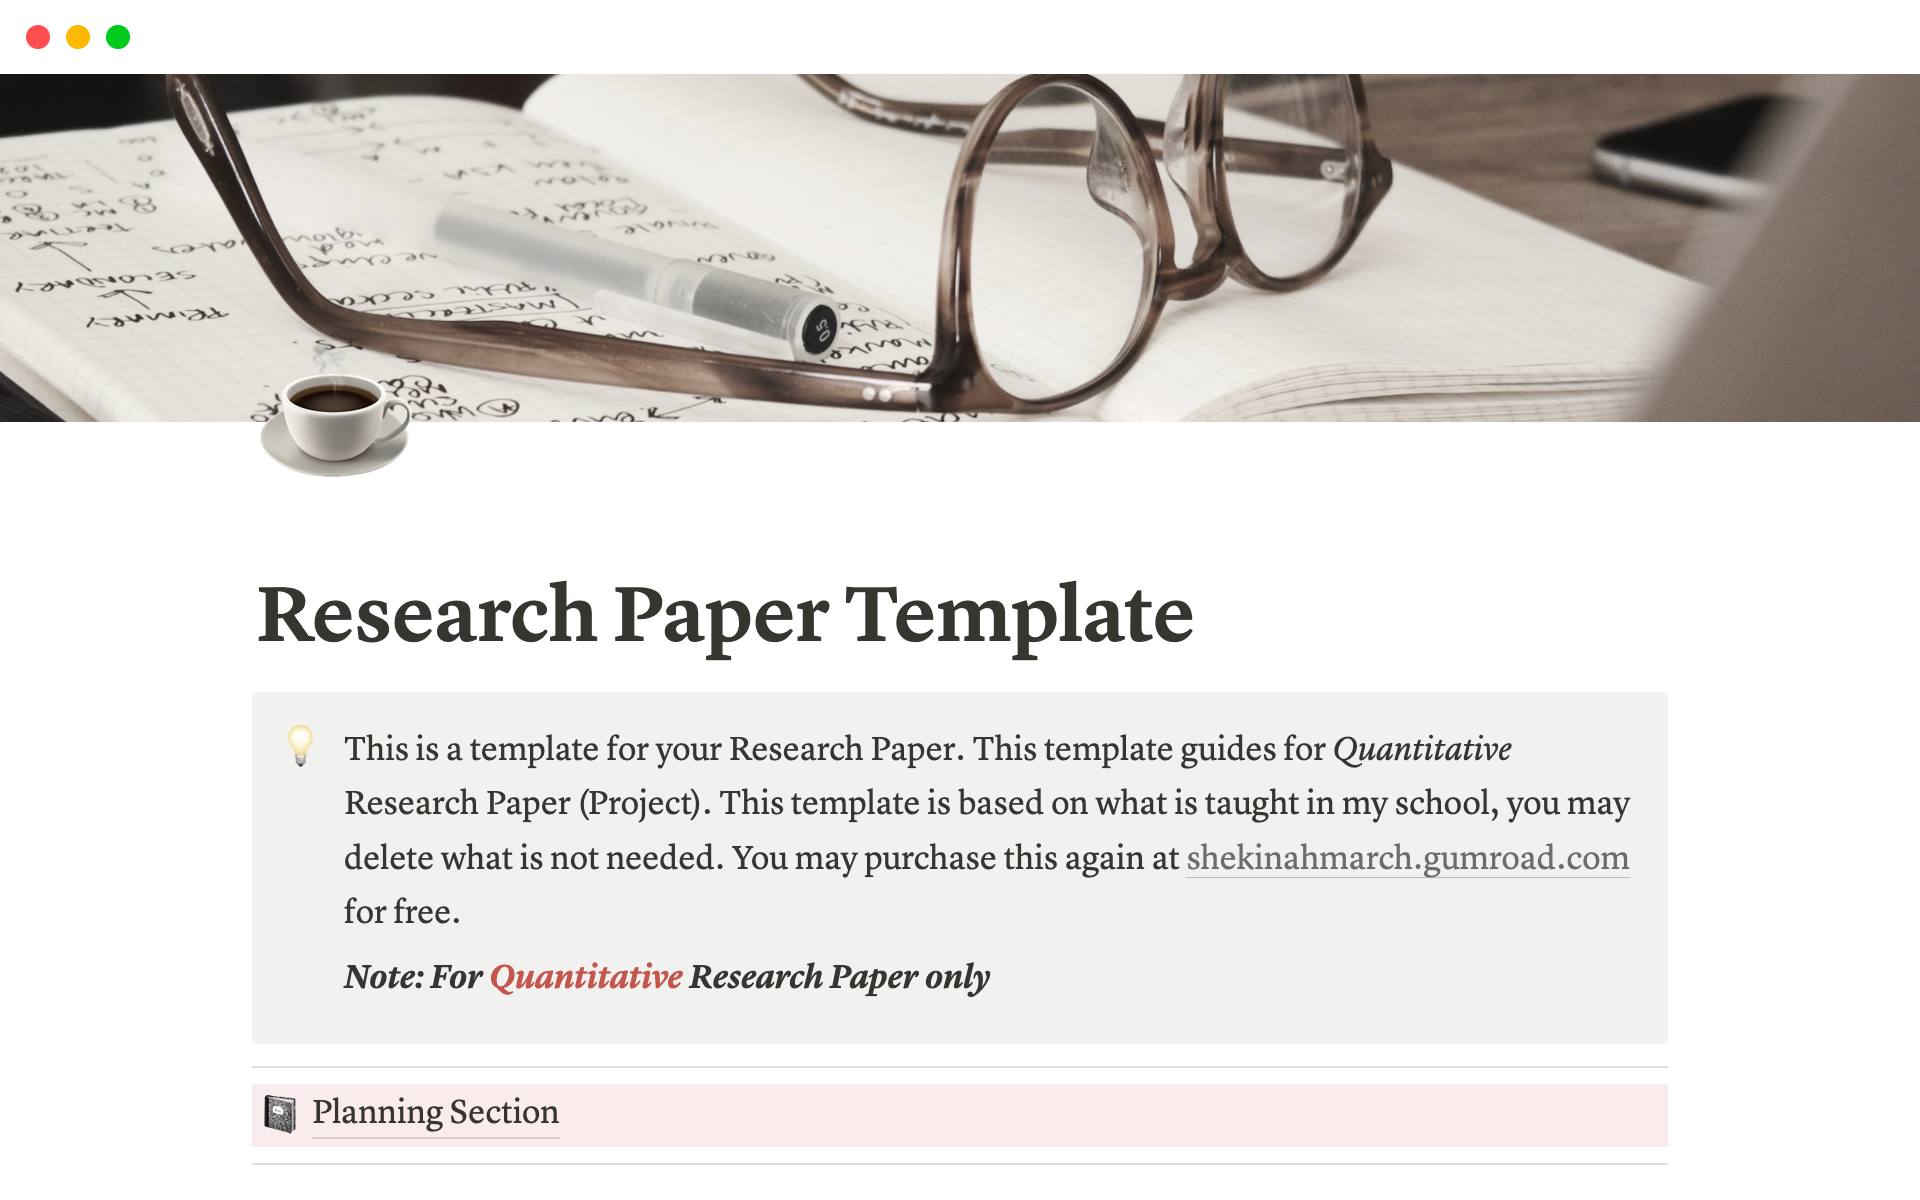 Aperçu du modèle de Research Paper Template